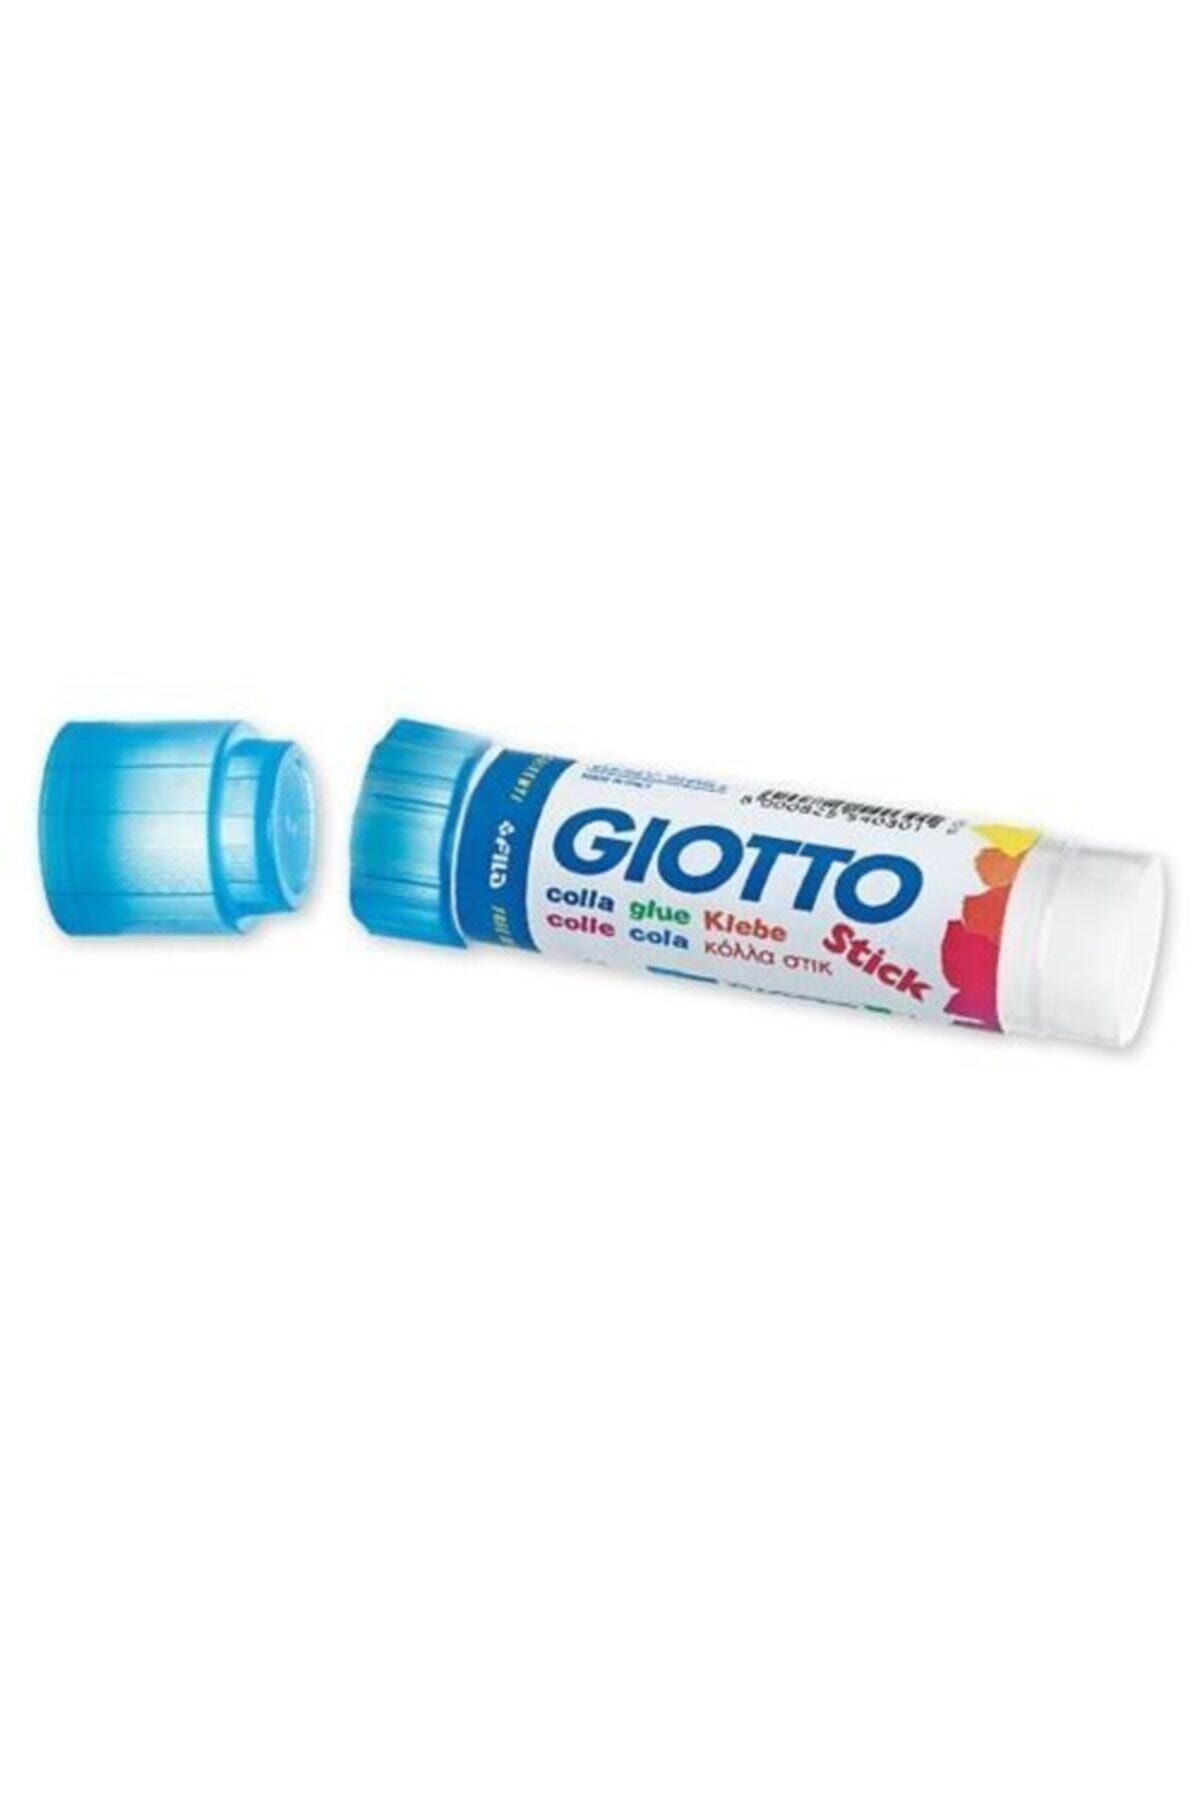 Giotto 4 Lü Set Gıotto 540200 Stıck Yapıştırıcı 20 Gr.